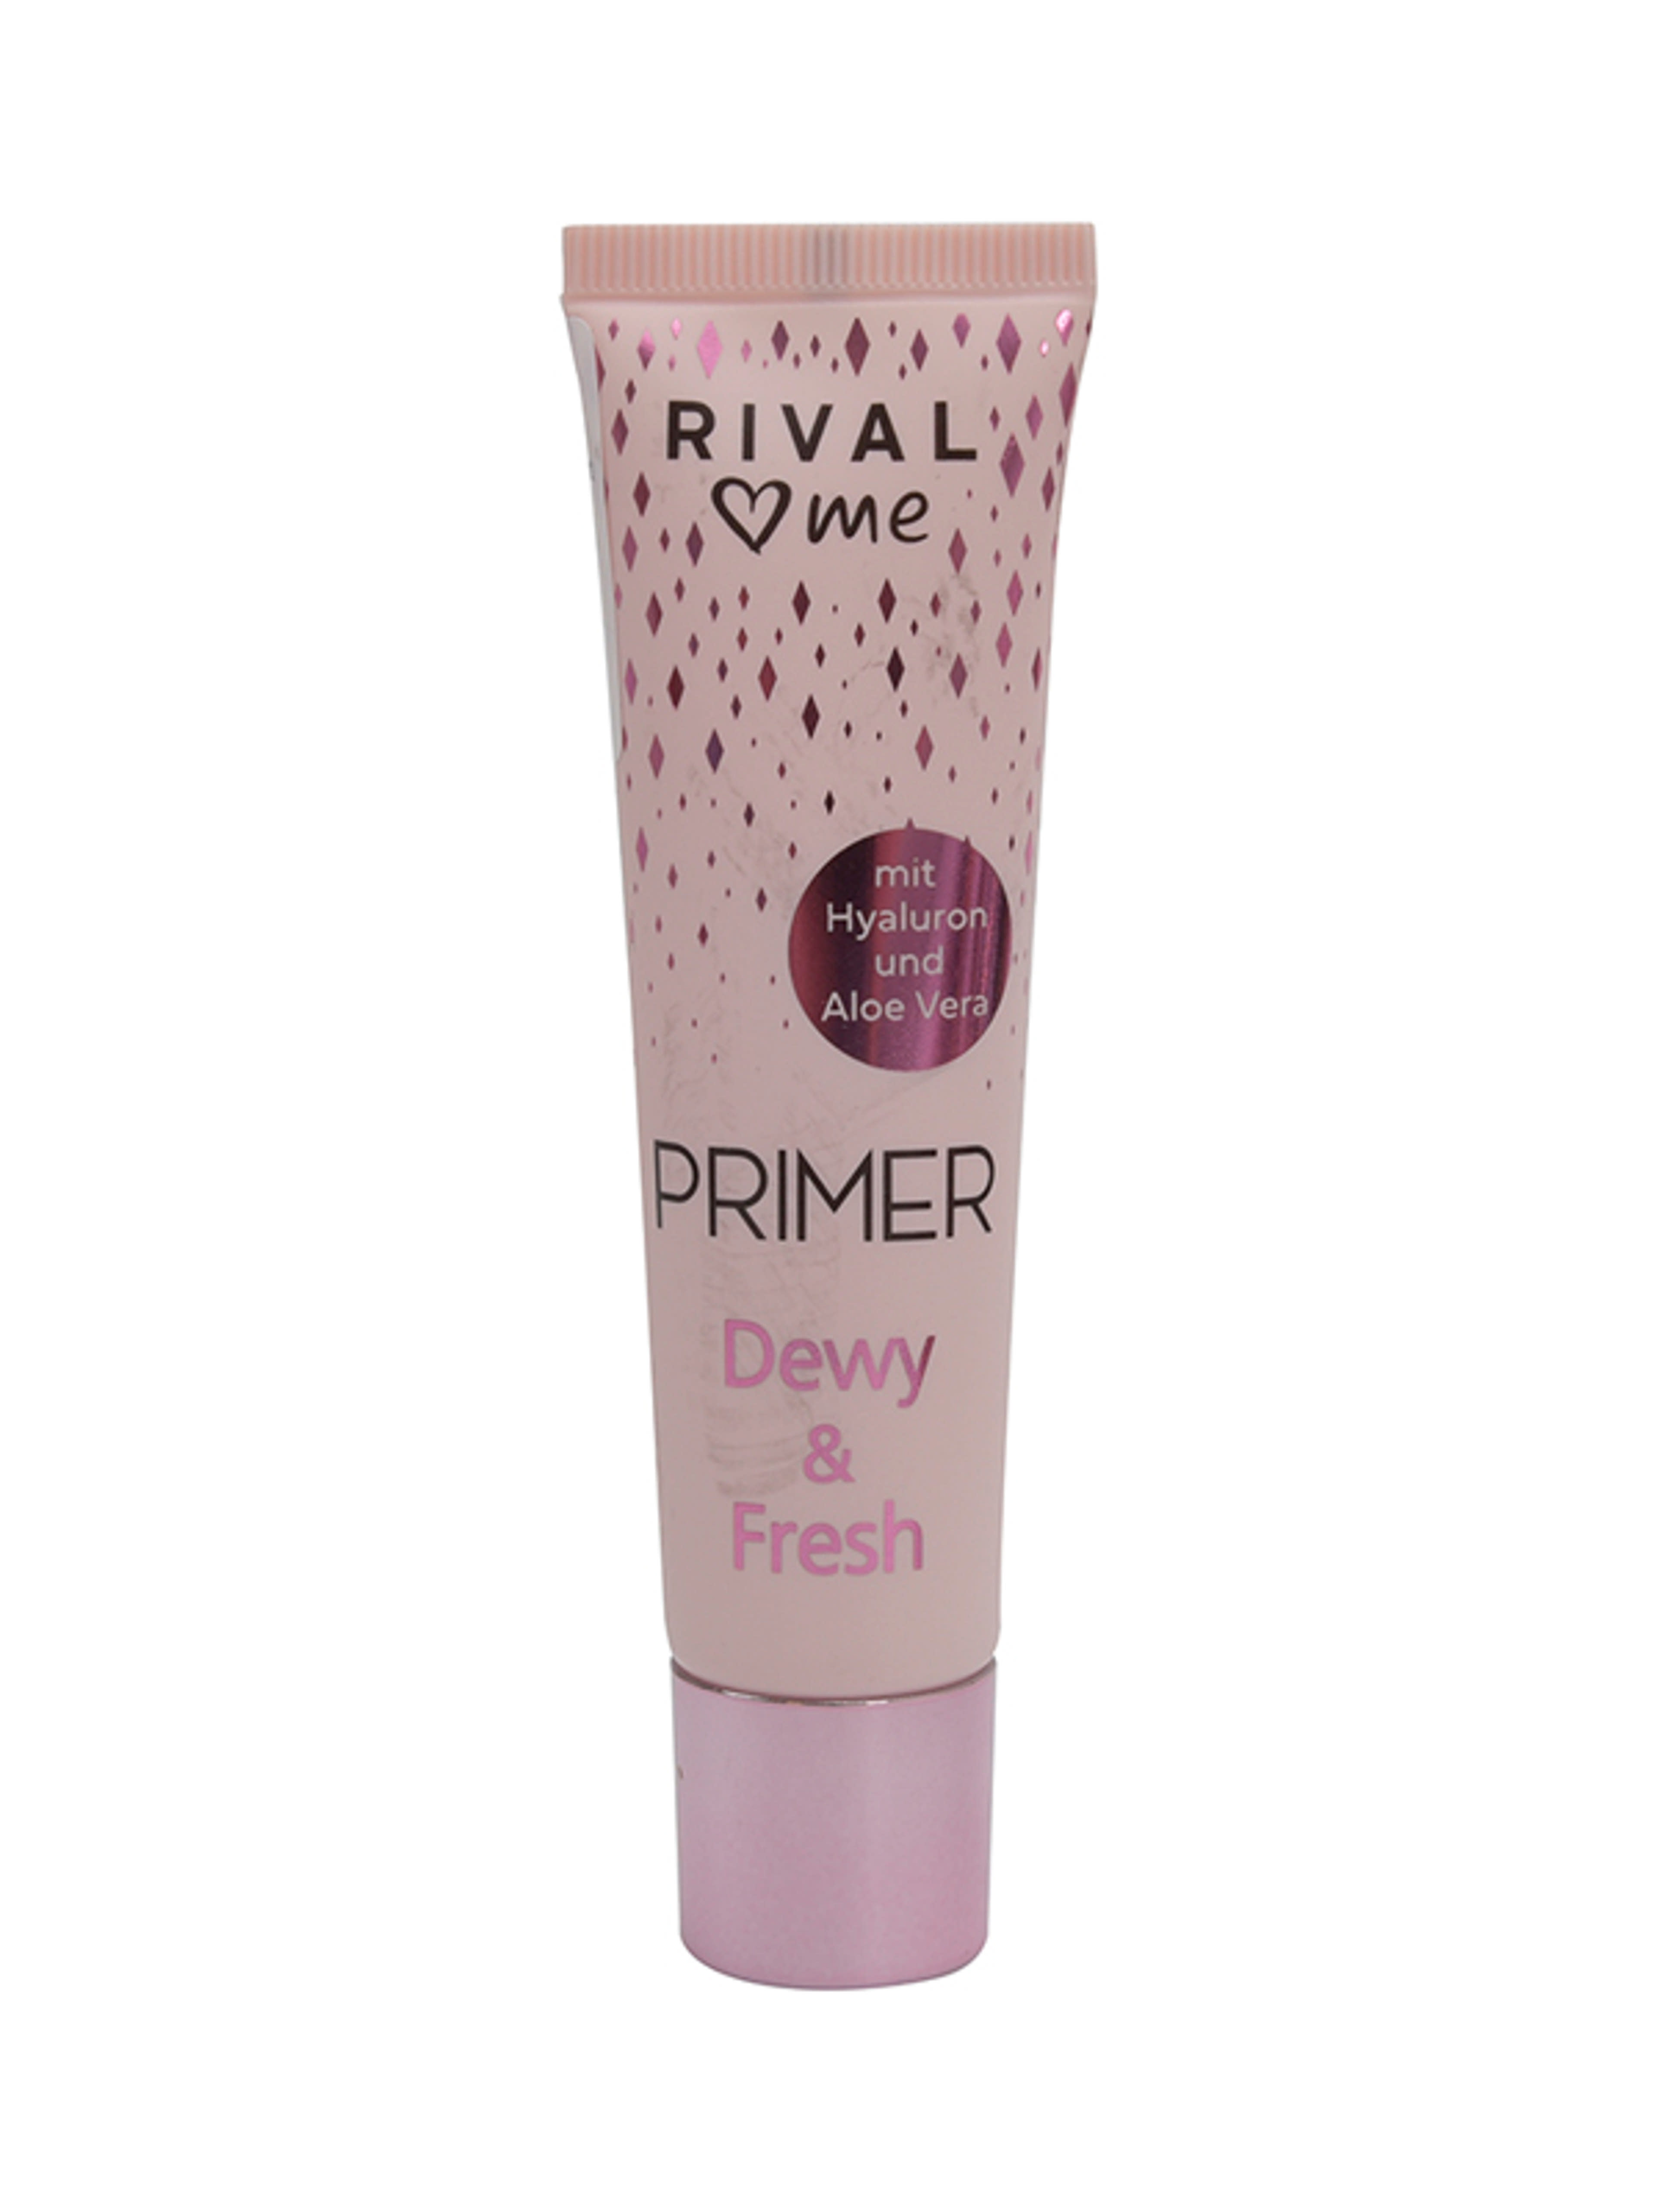 Rival Loves Me primer dewy & fresh - 1 db-1